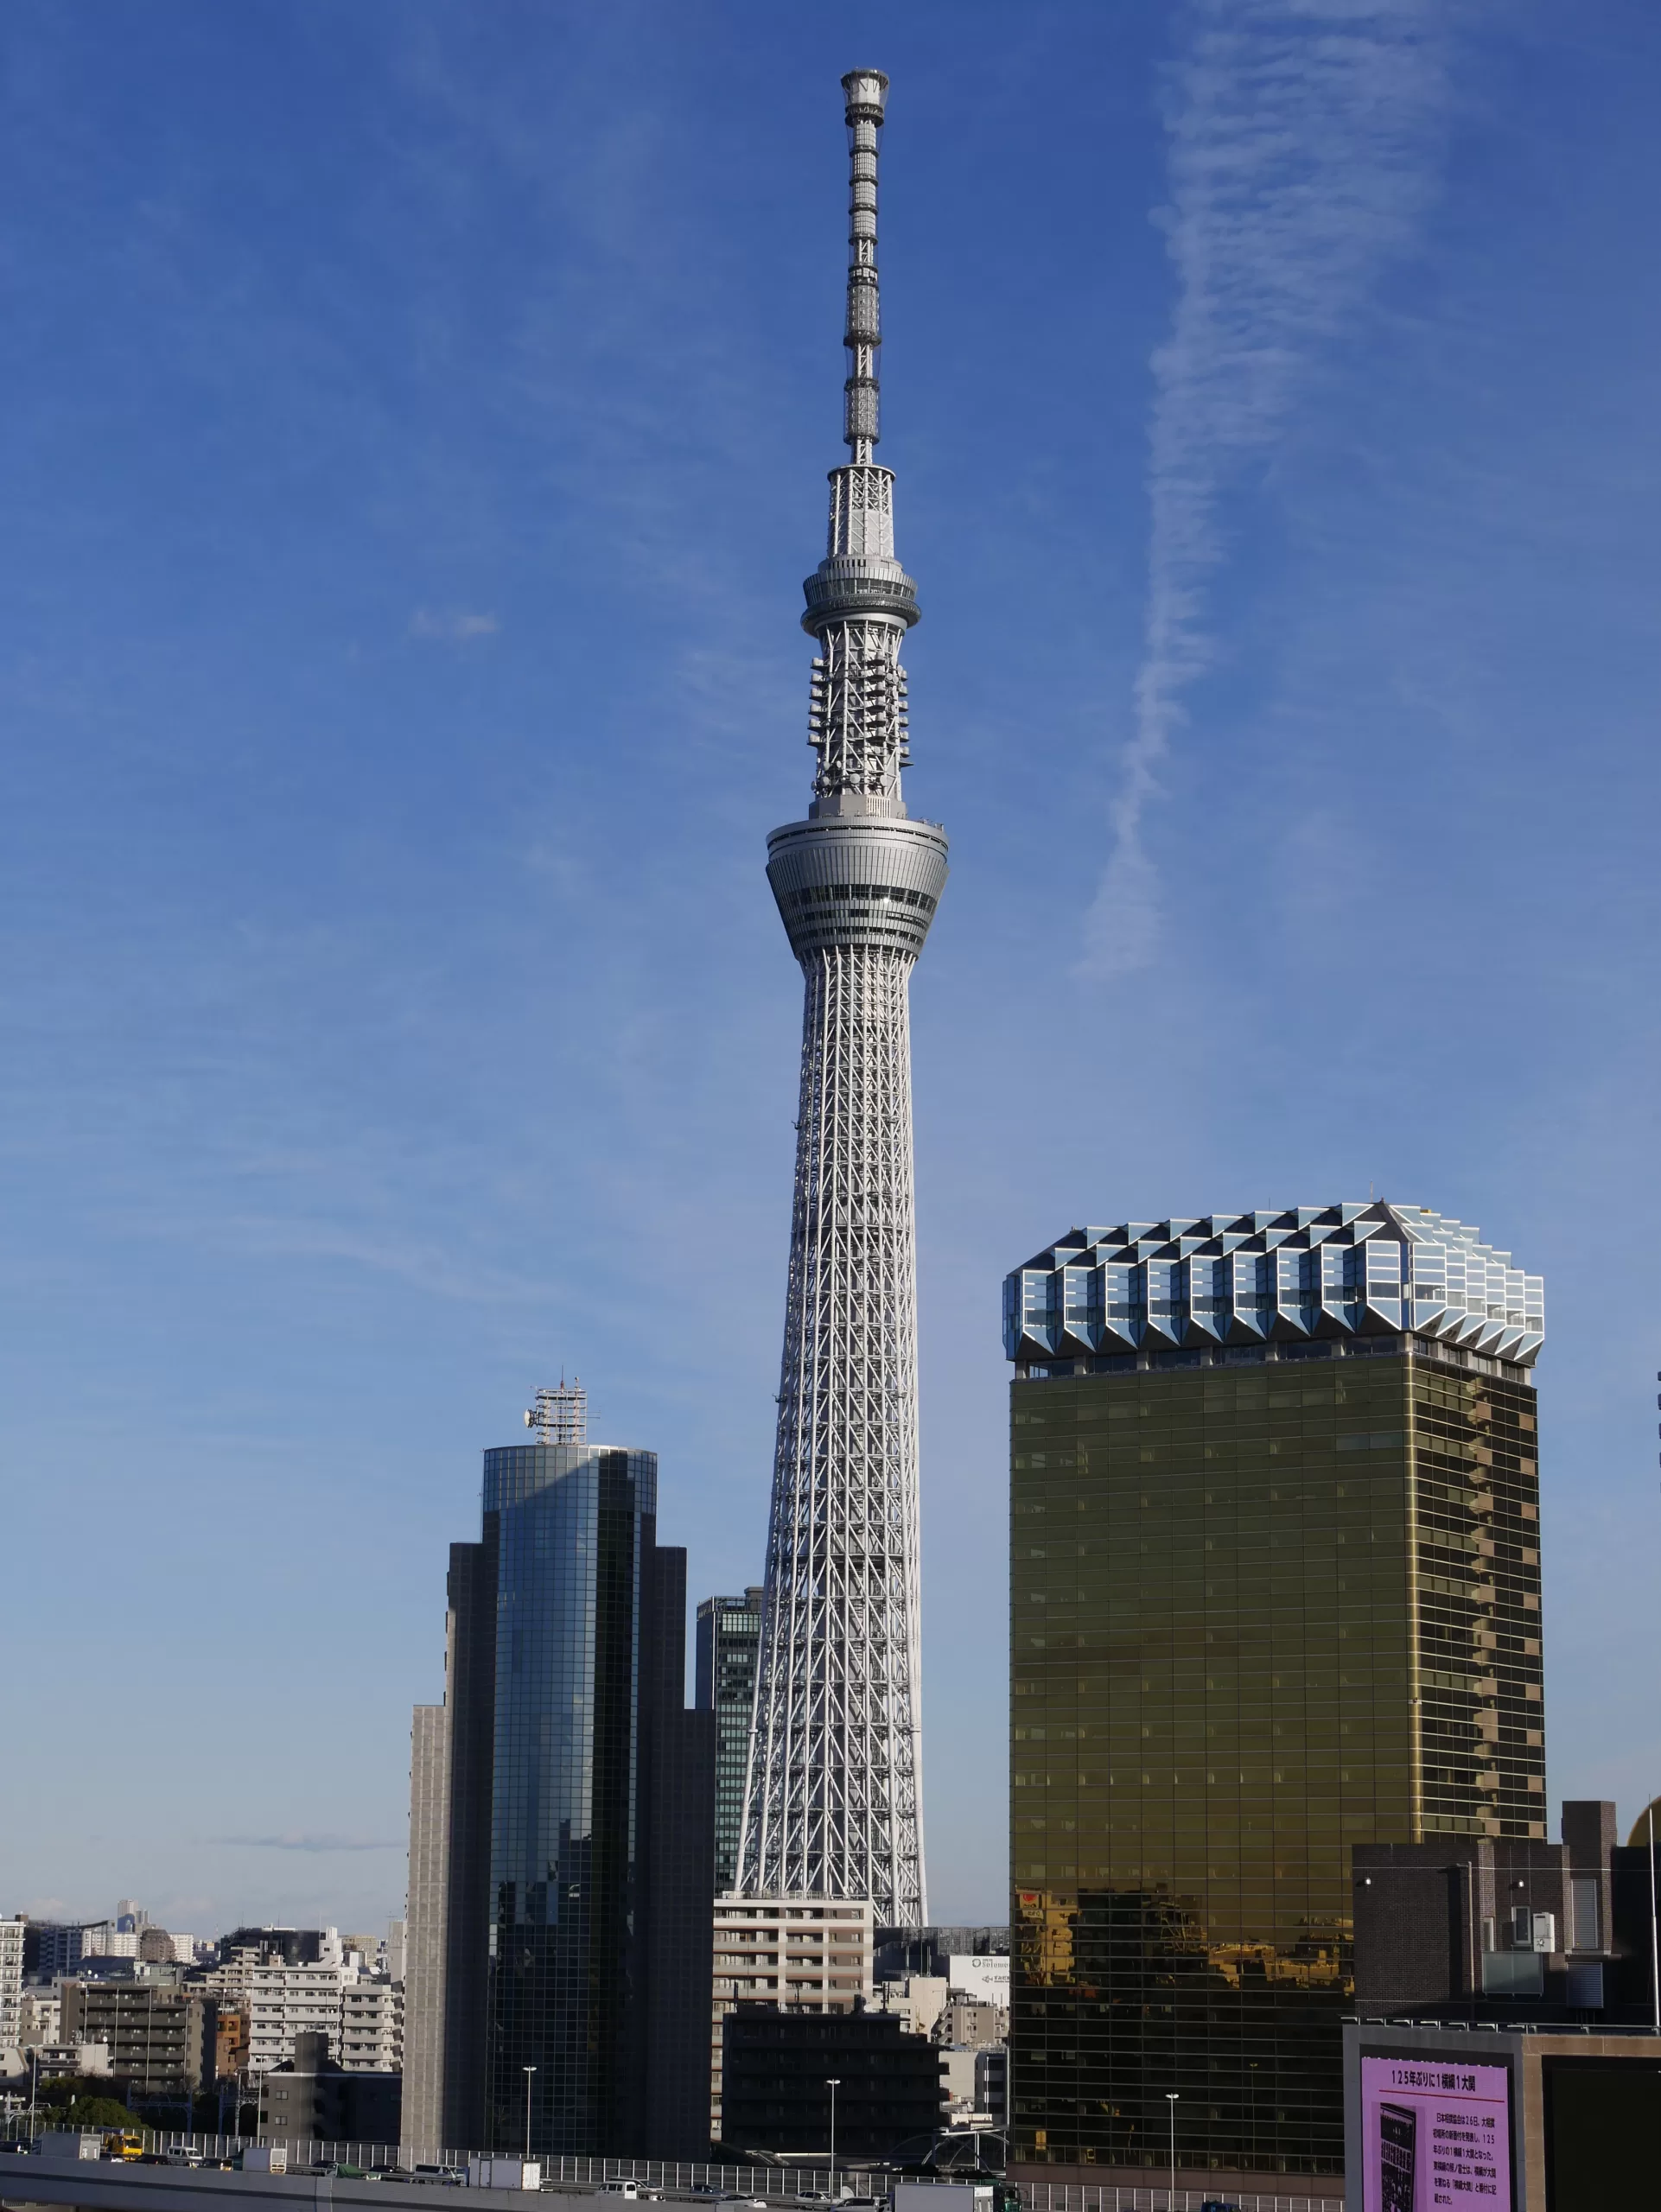 Tokio SKYTREE – Tip na úžasný výhled na celé Tokio – 3.část - Cestování po Japonsku - Petr Sycha